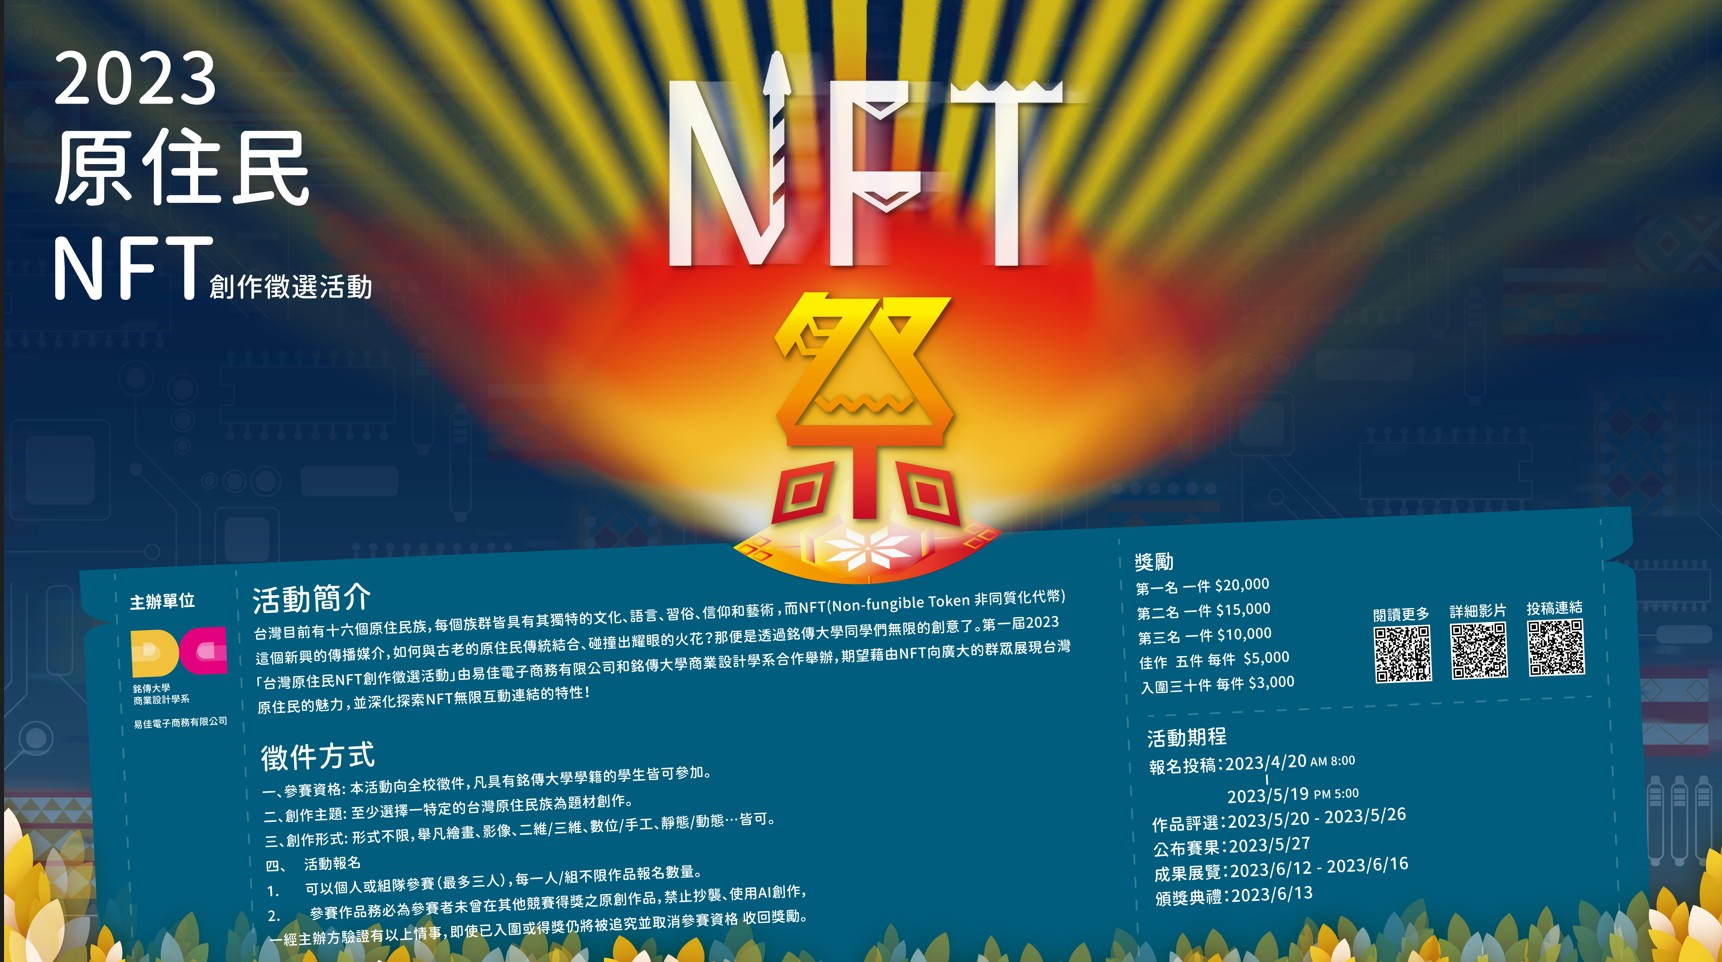 Featured image for “2023台灣原住民NFT創作徵選活動”